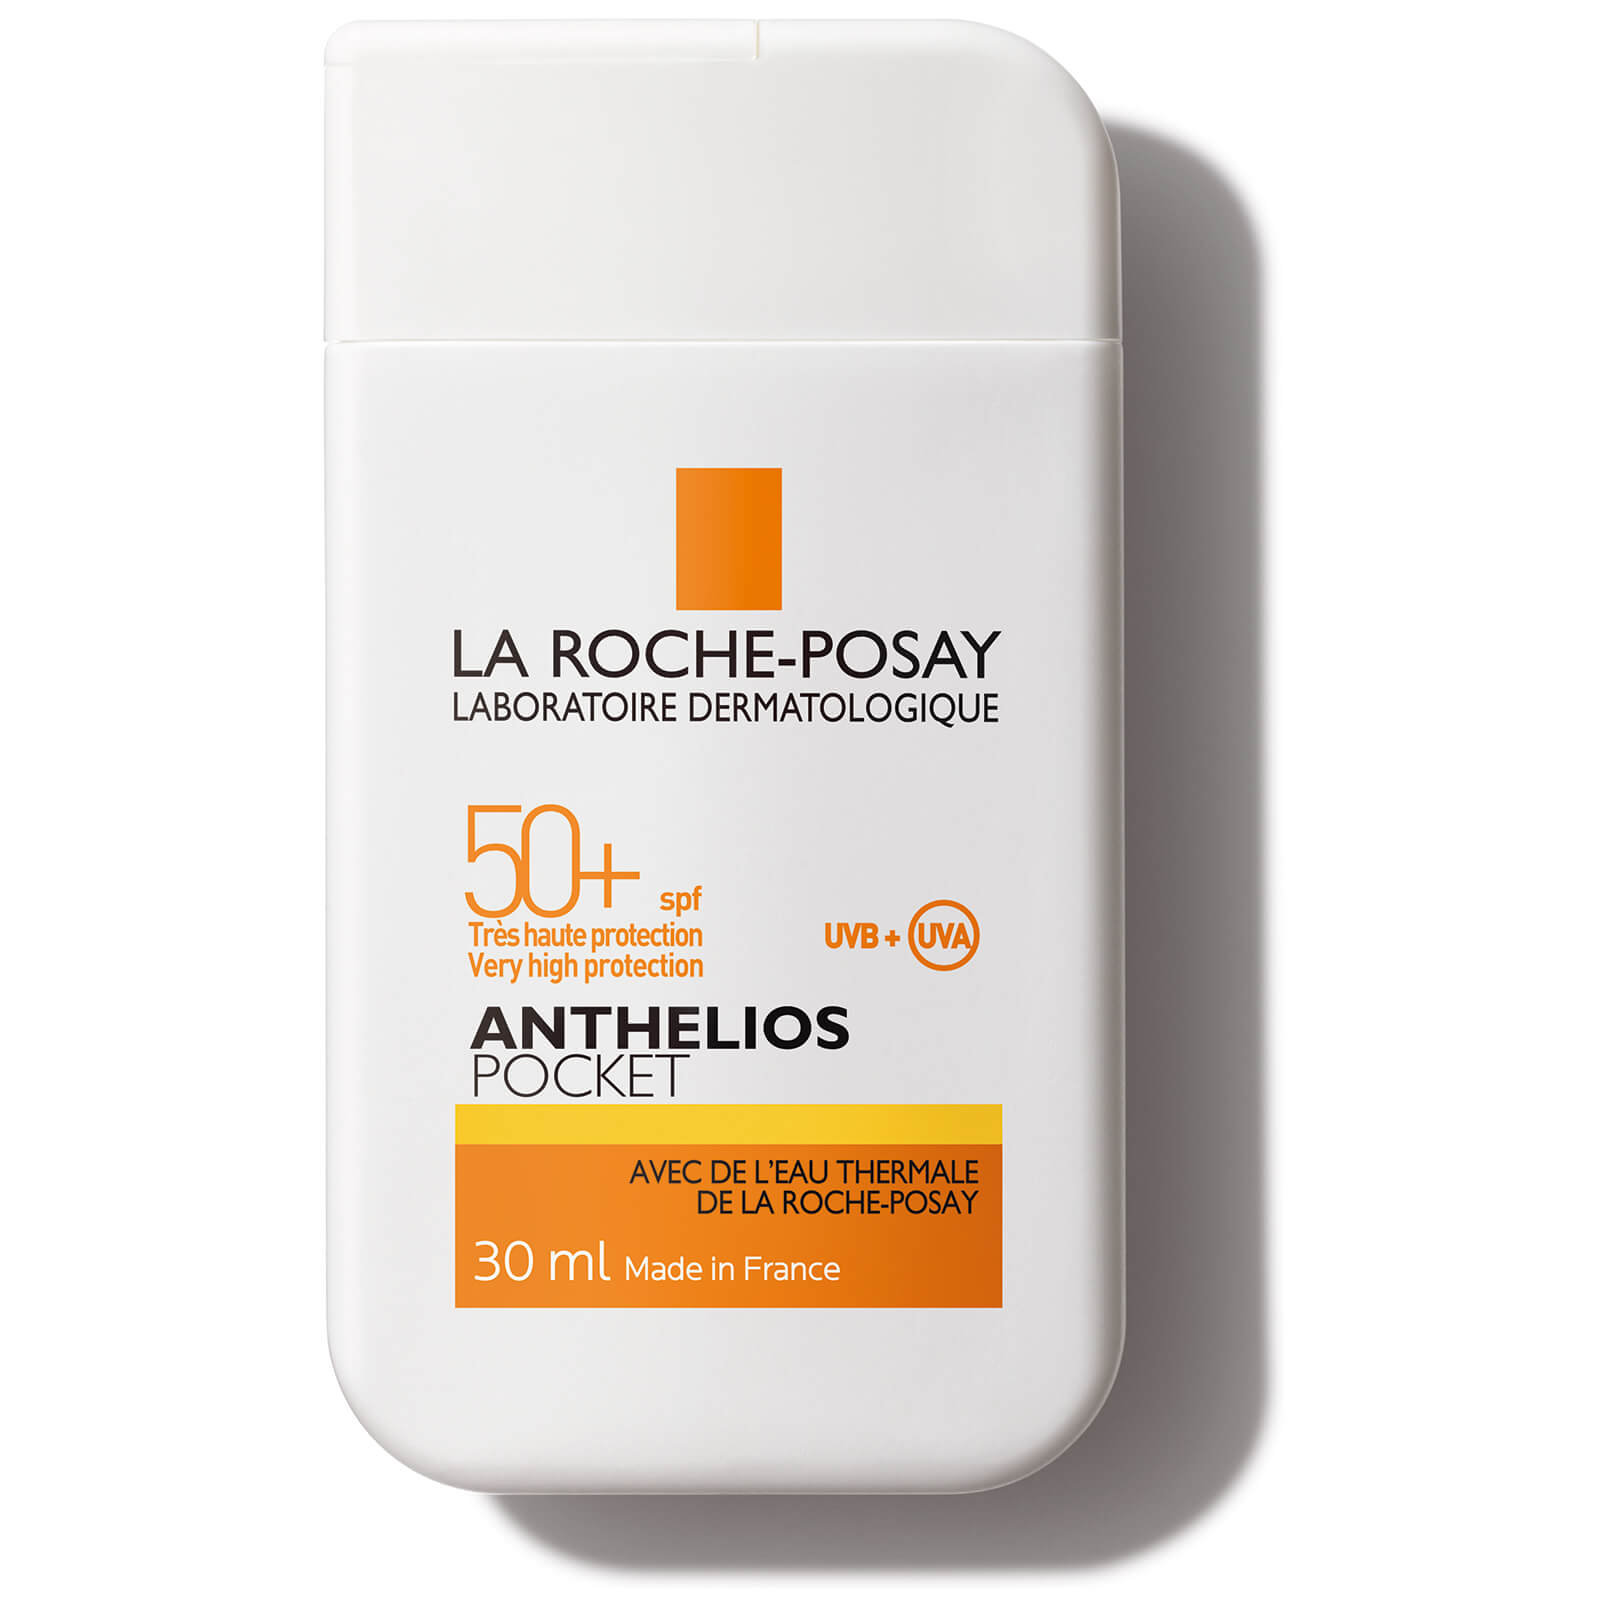 La Roche-Posay Anthelios Pocket